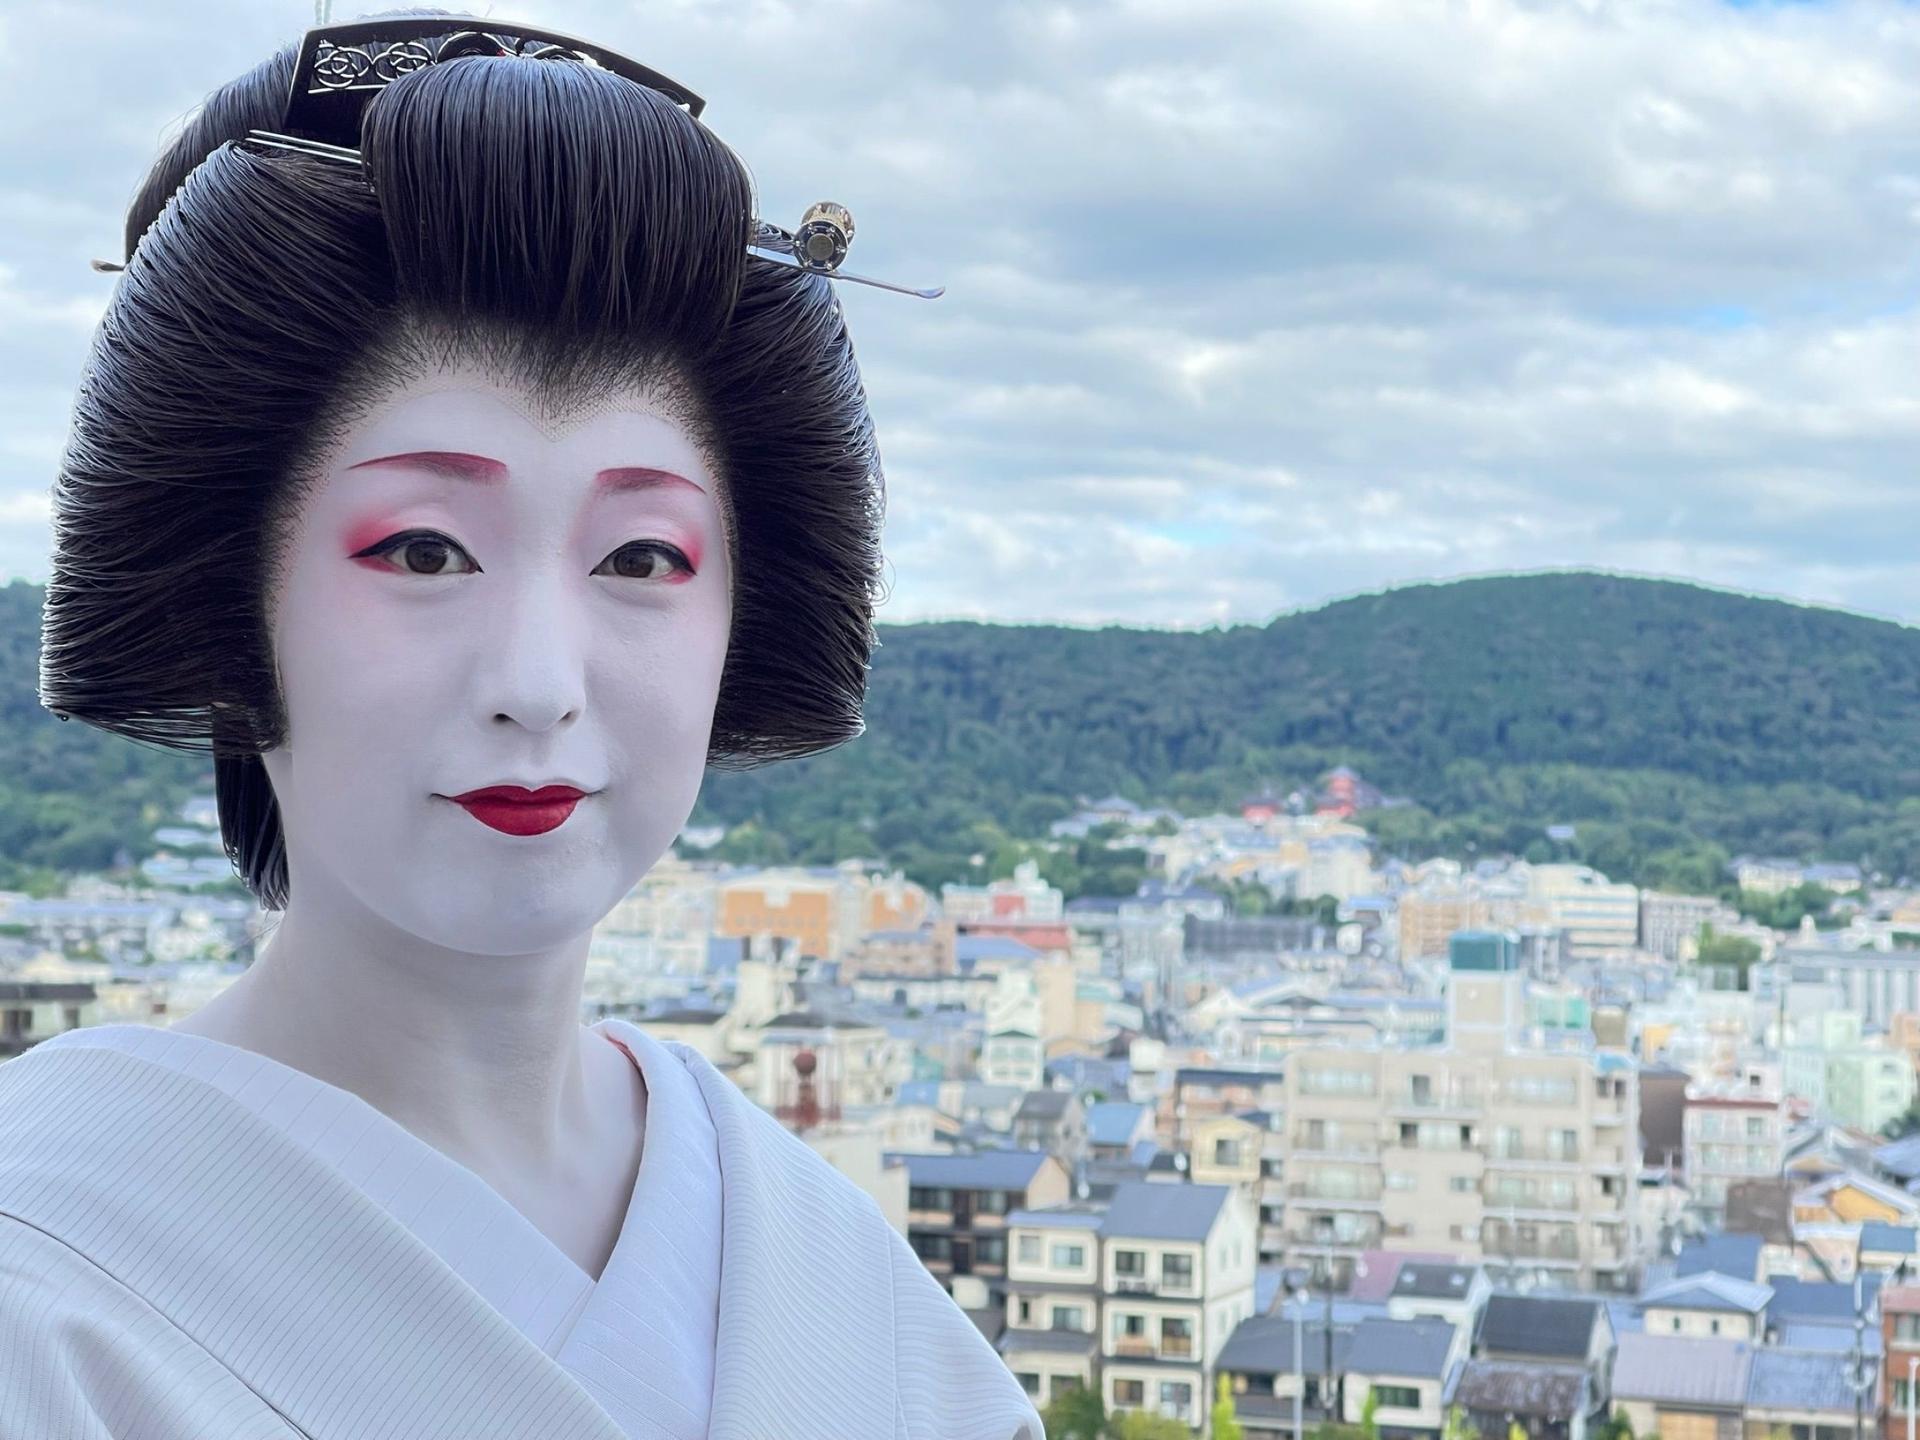 A Japanese woman dressed as a geisha